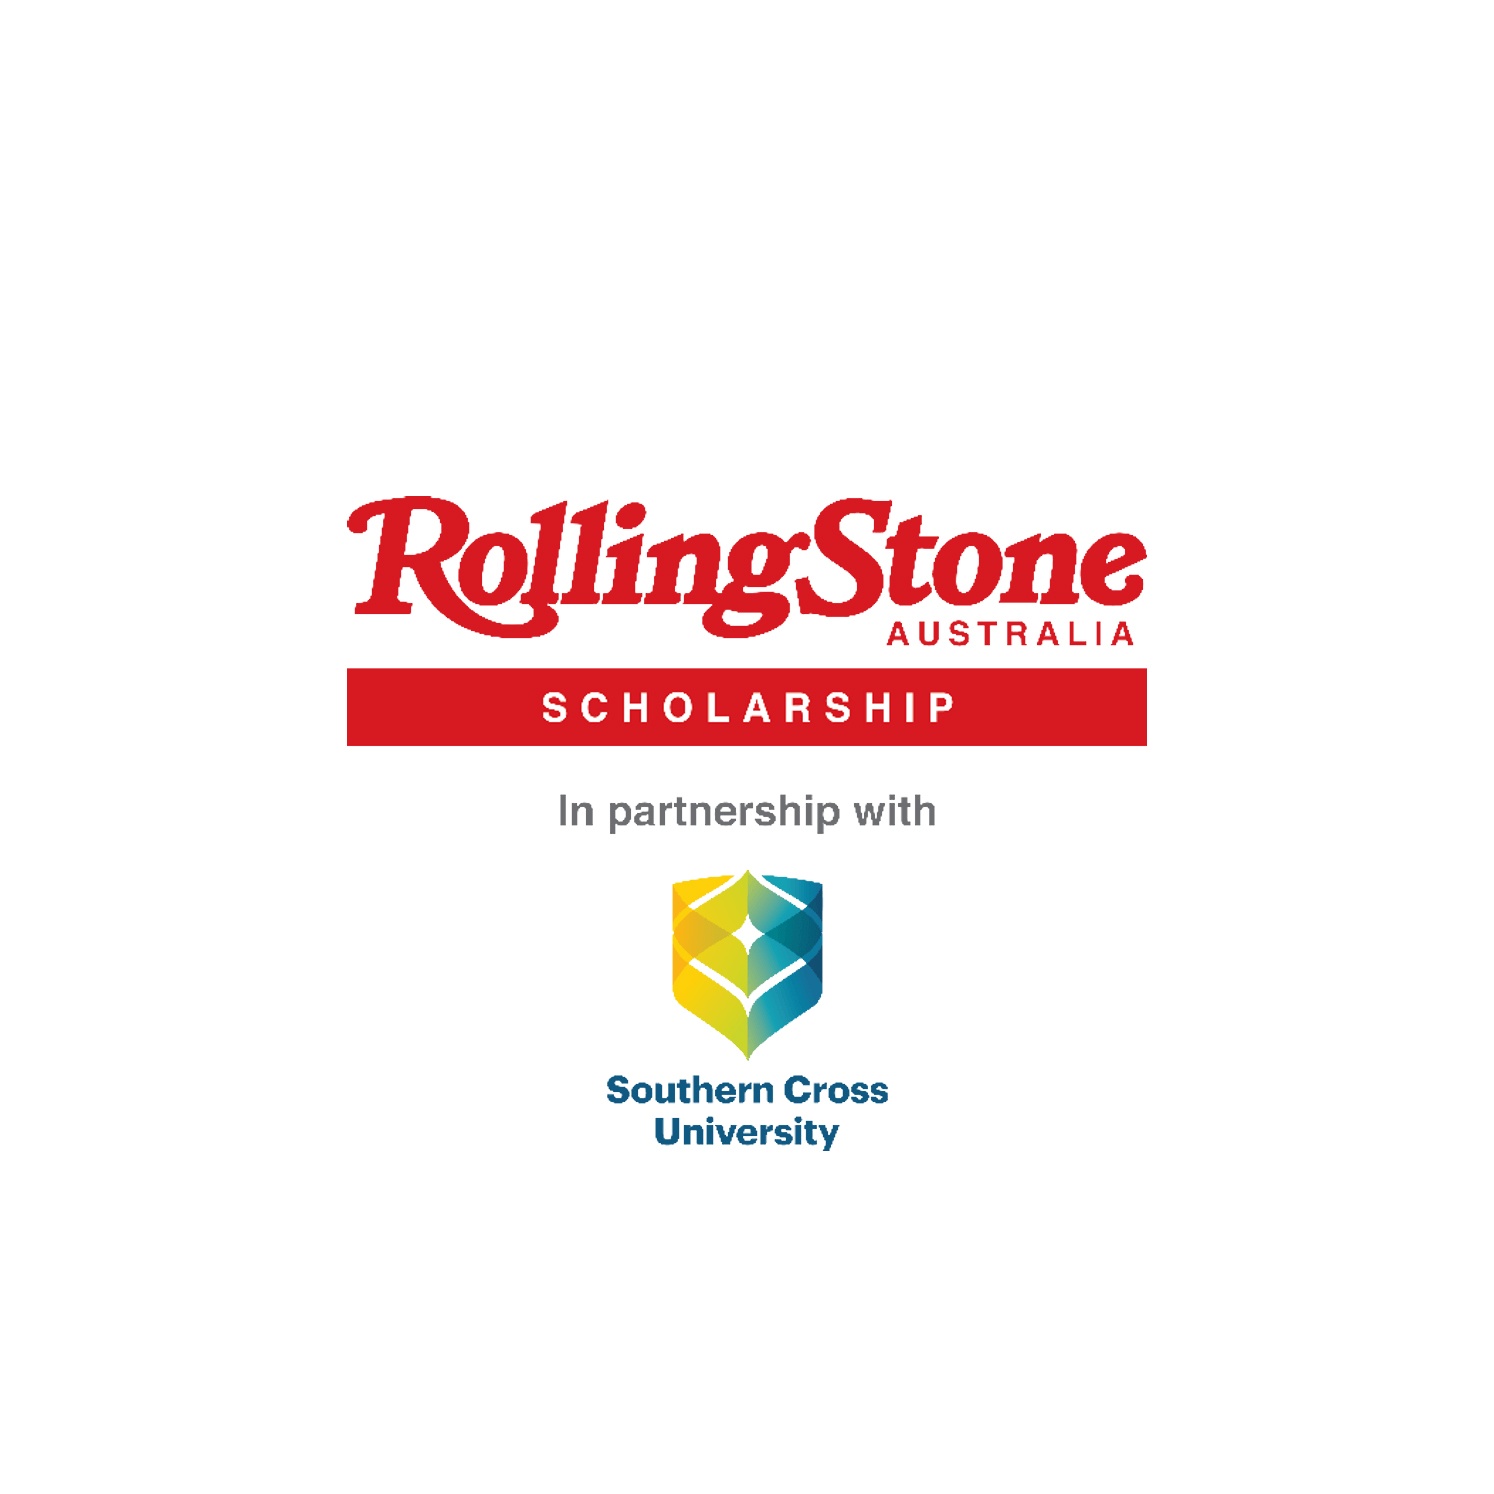 Rolling stone scholarship logo